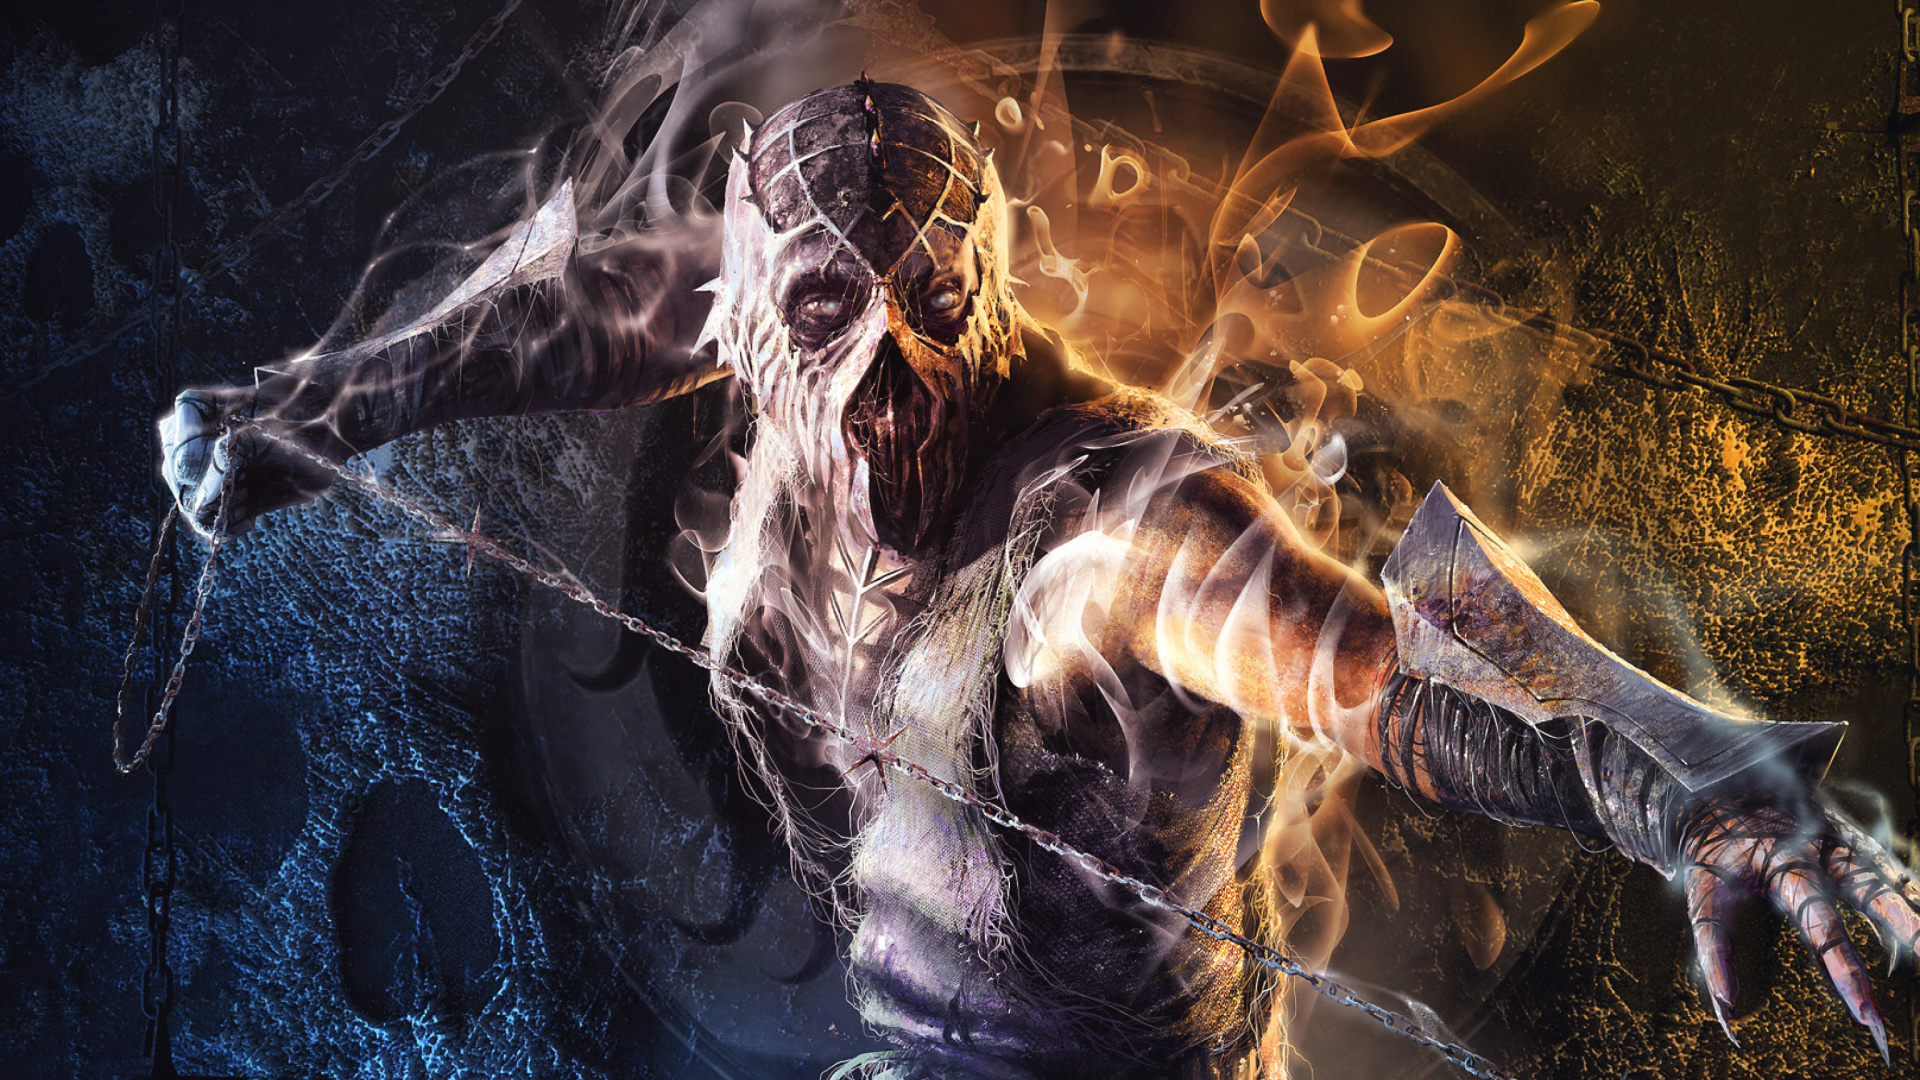 Krypt Demon in Mortal Kombat wallpaper 1920x1080